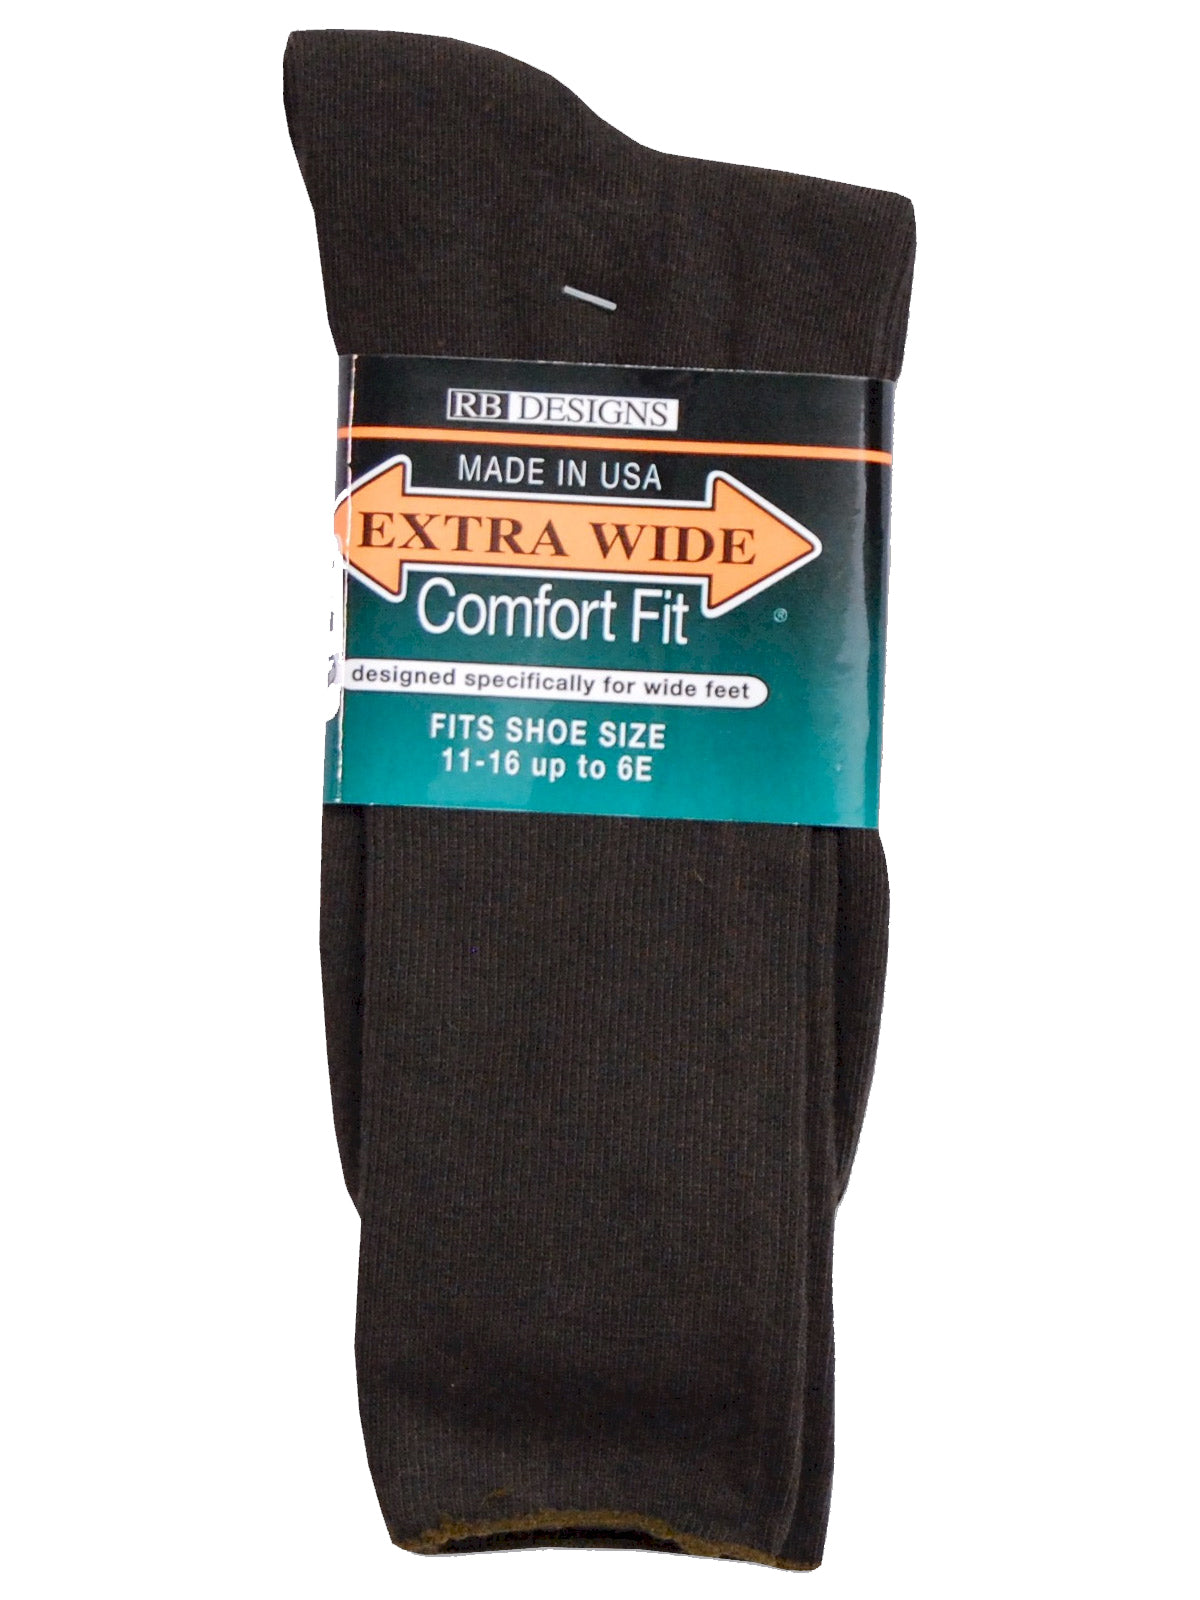 Extra Wide Men's Comfort Fit Dress Socks in Brown - Size Medium (8.5 - 11.5)